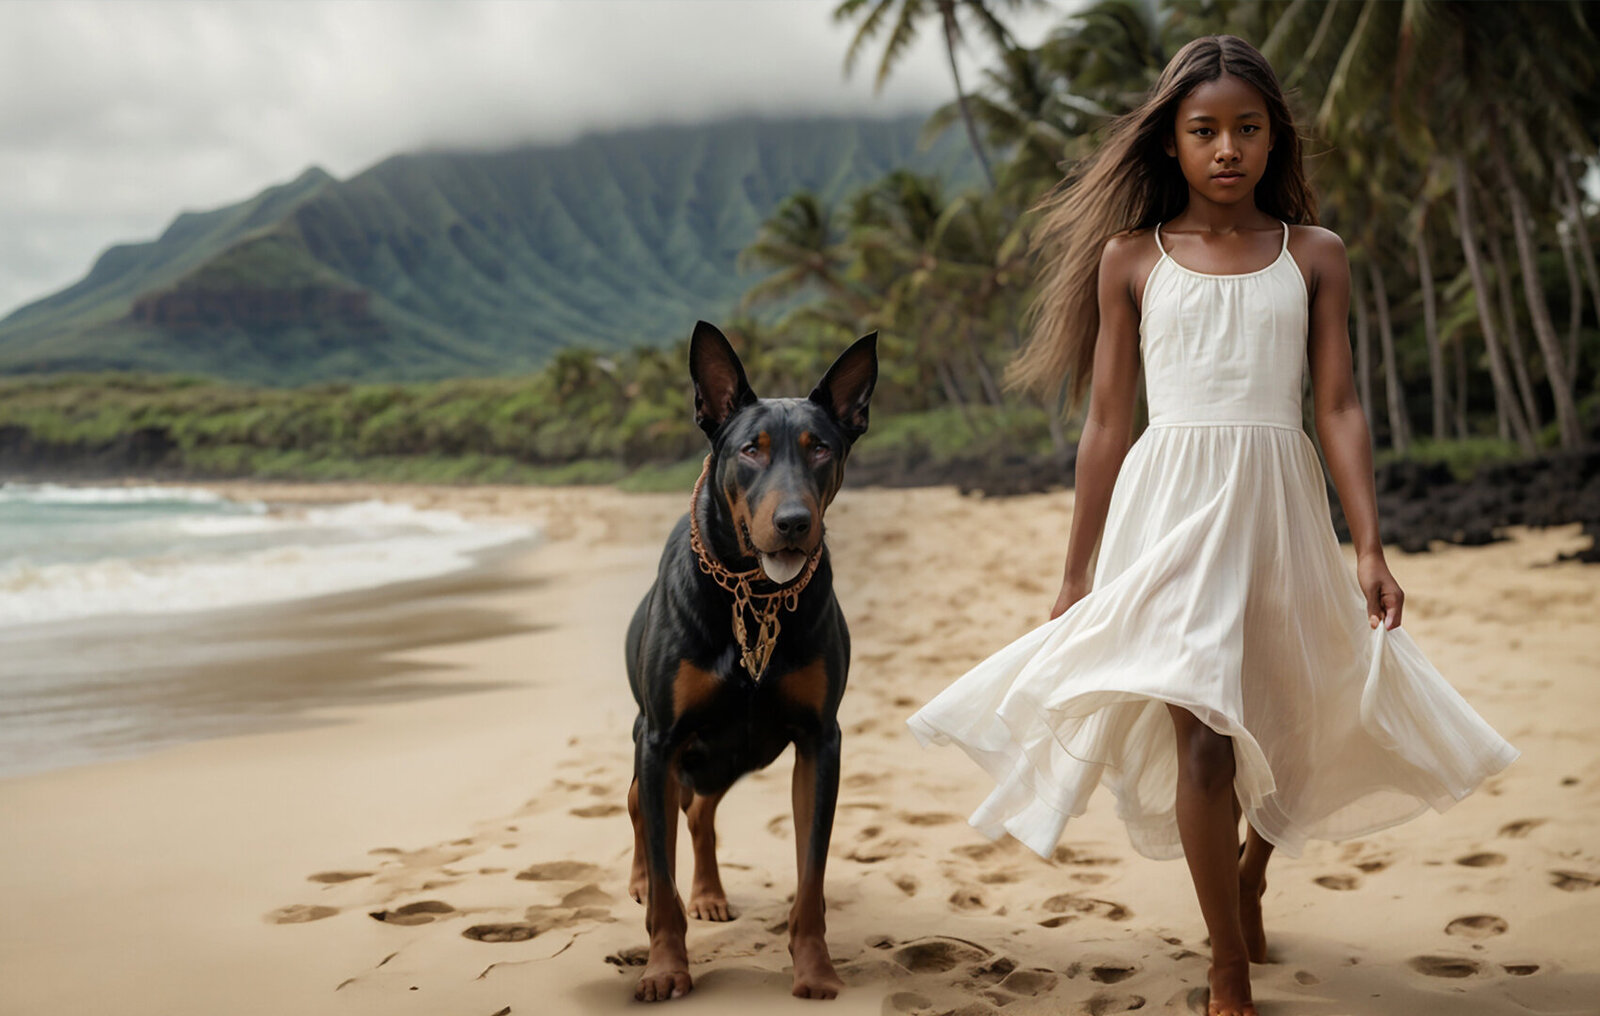 Photographers on the big island of Hawaii